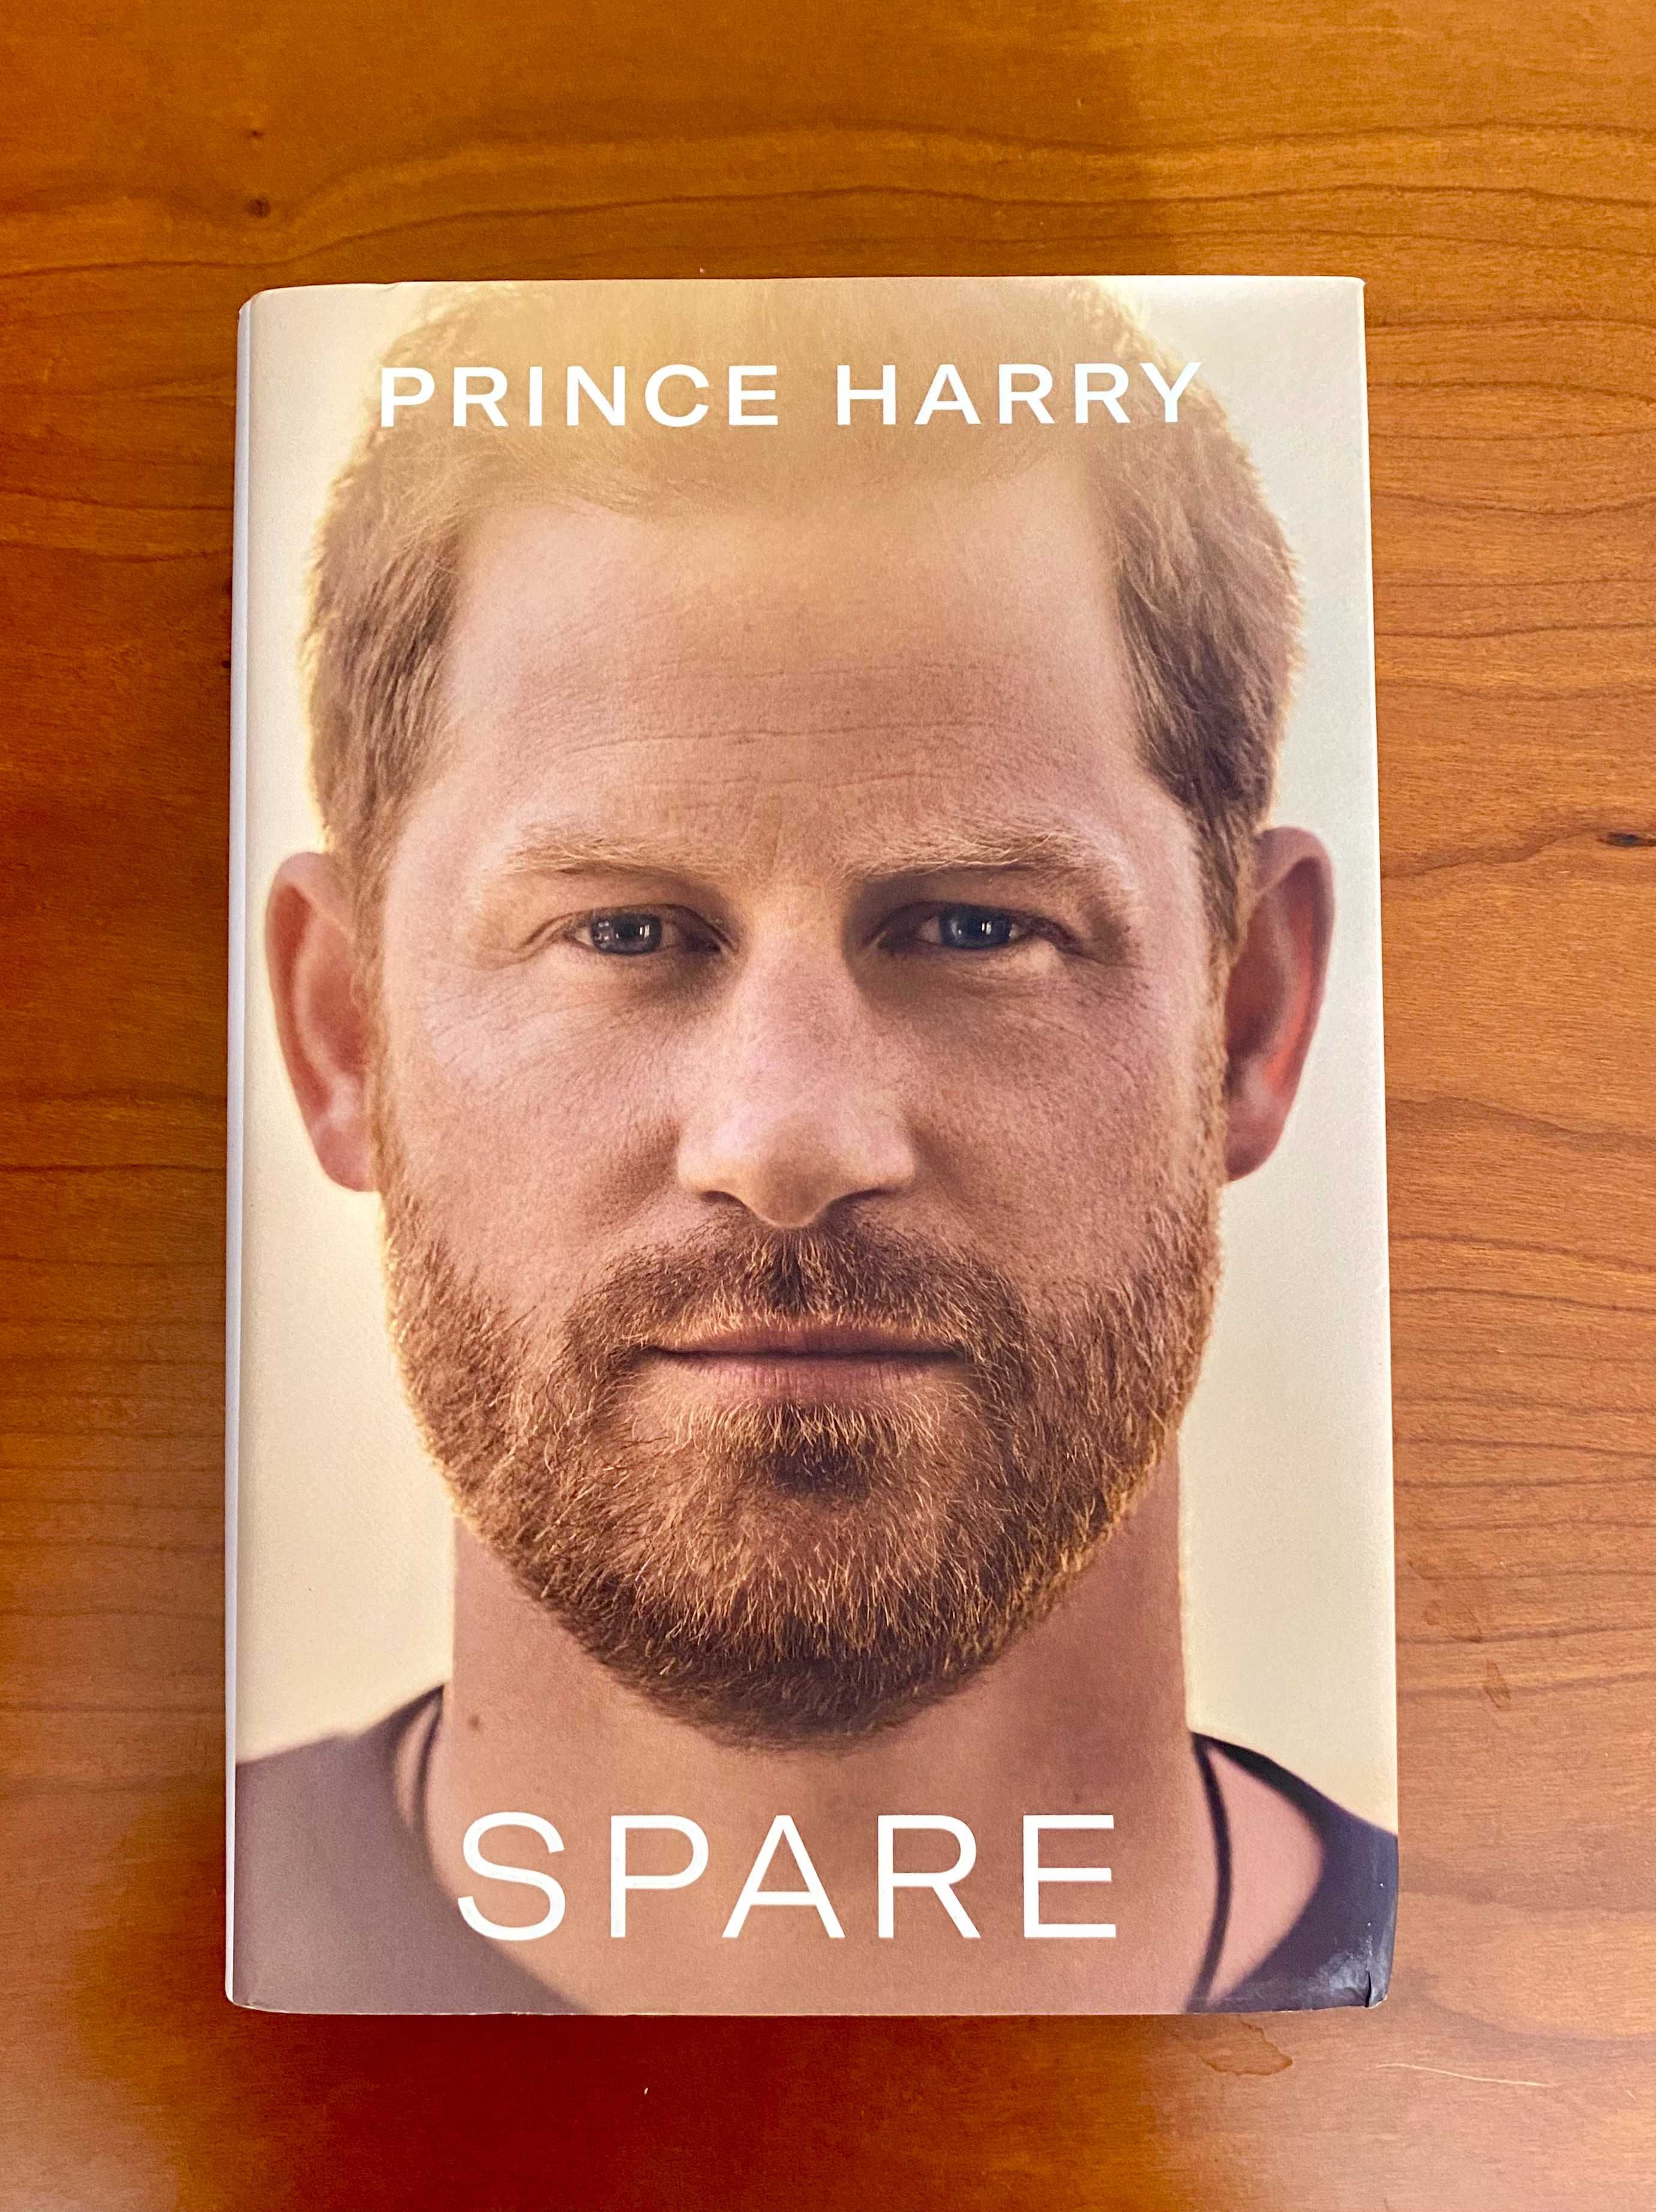 "Spare" - Prince Harry